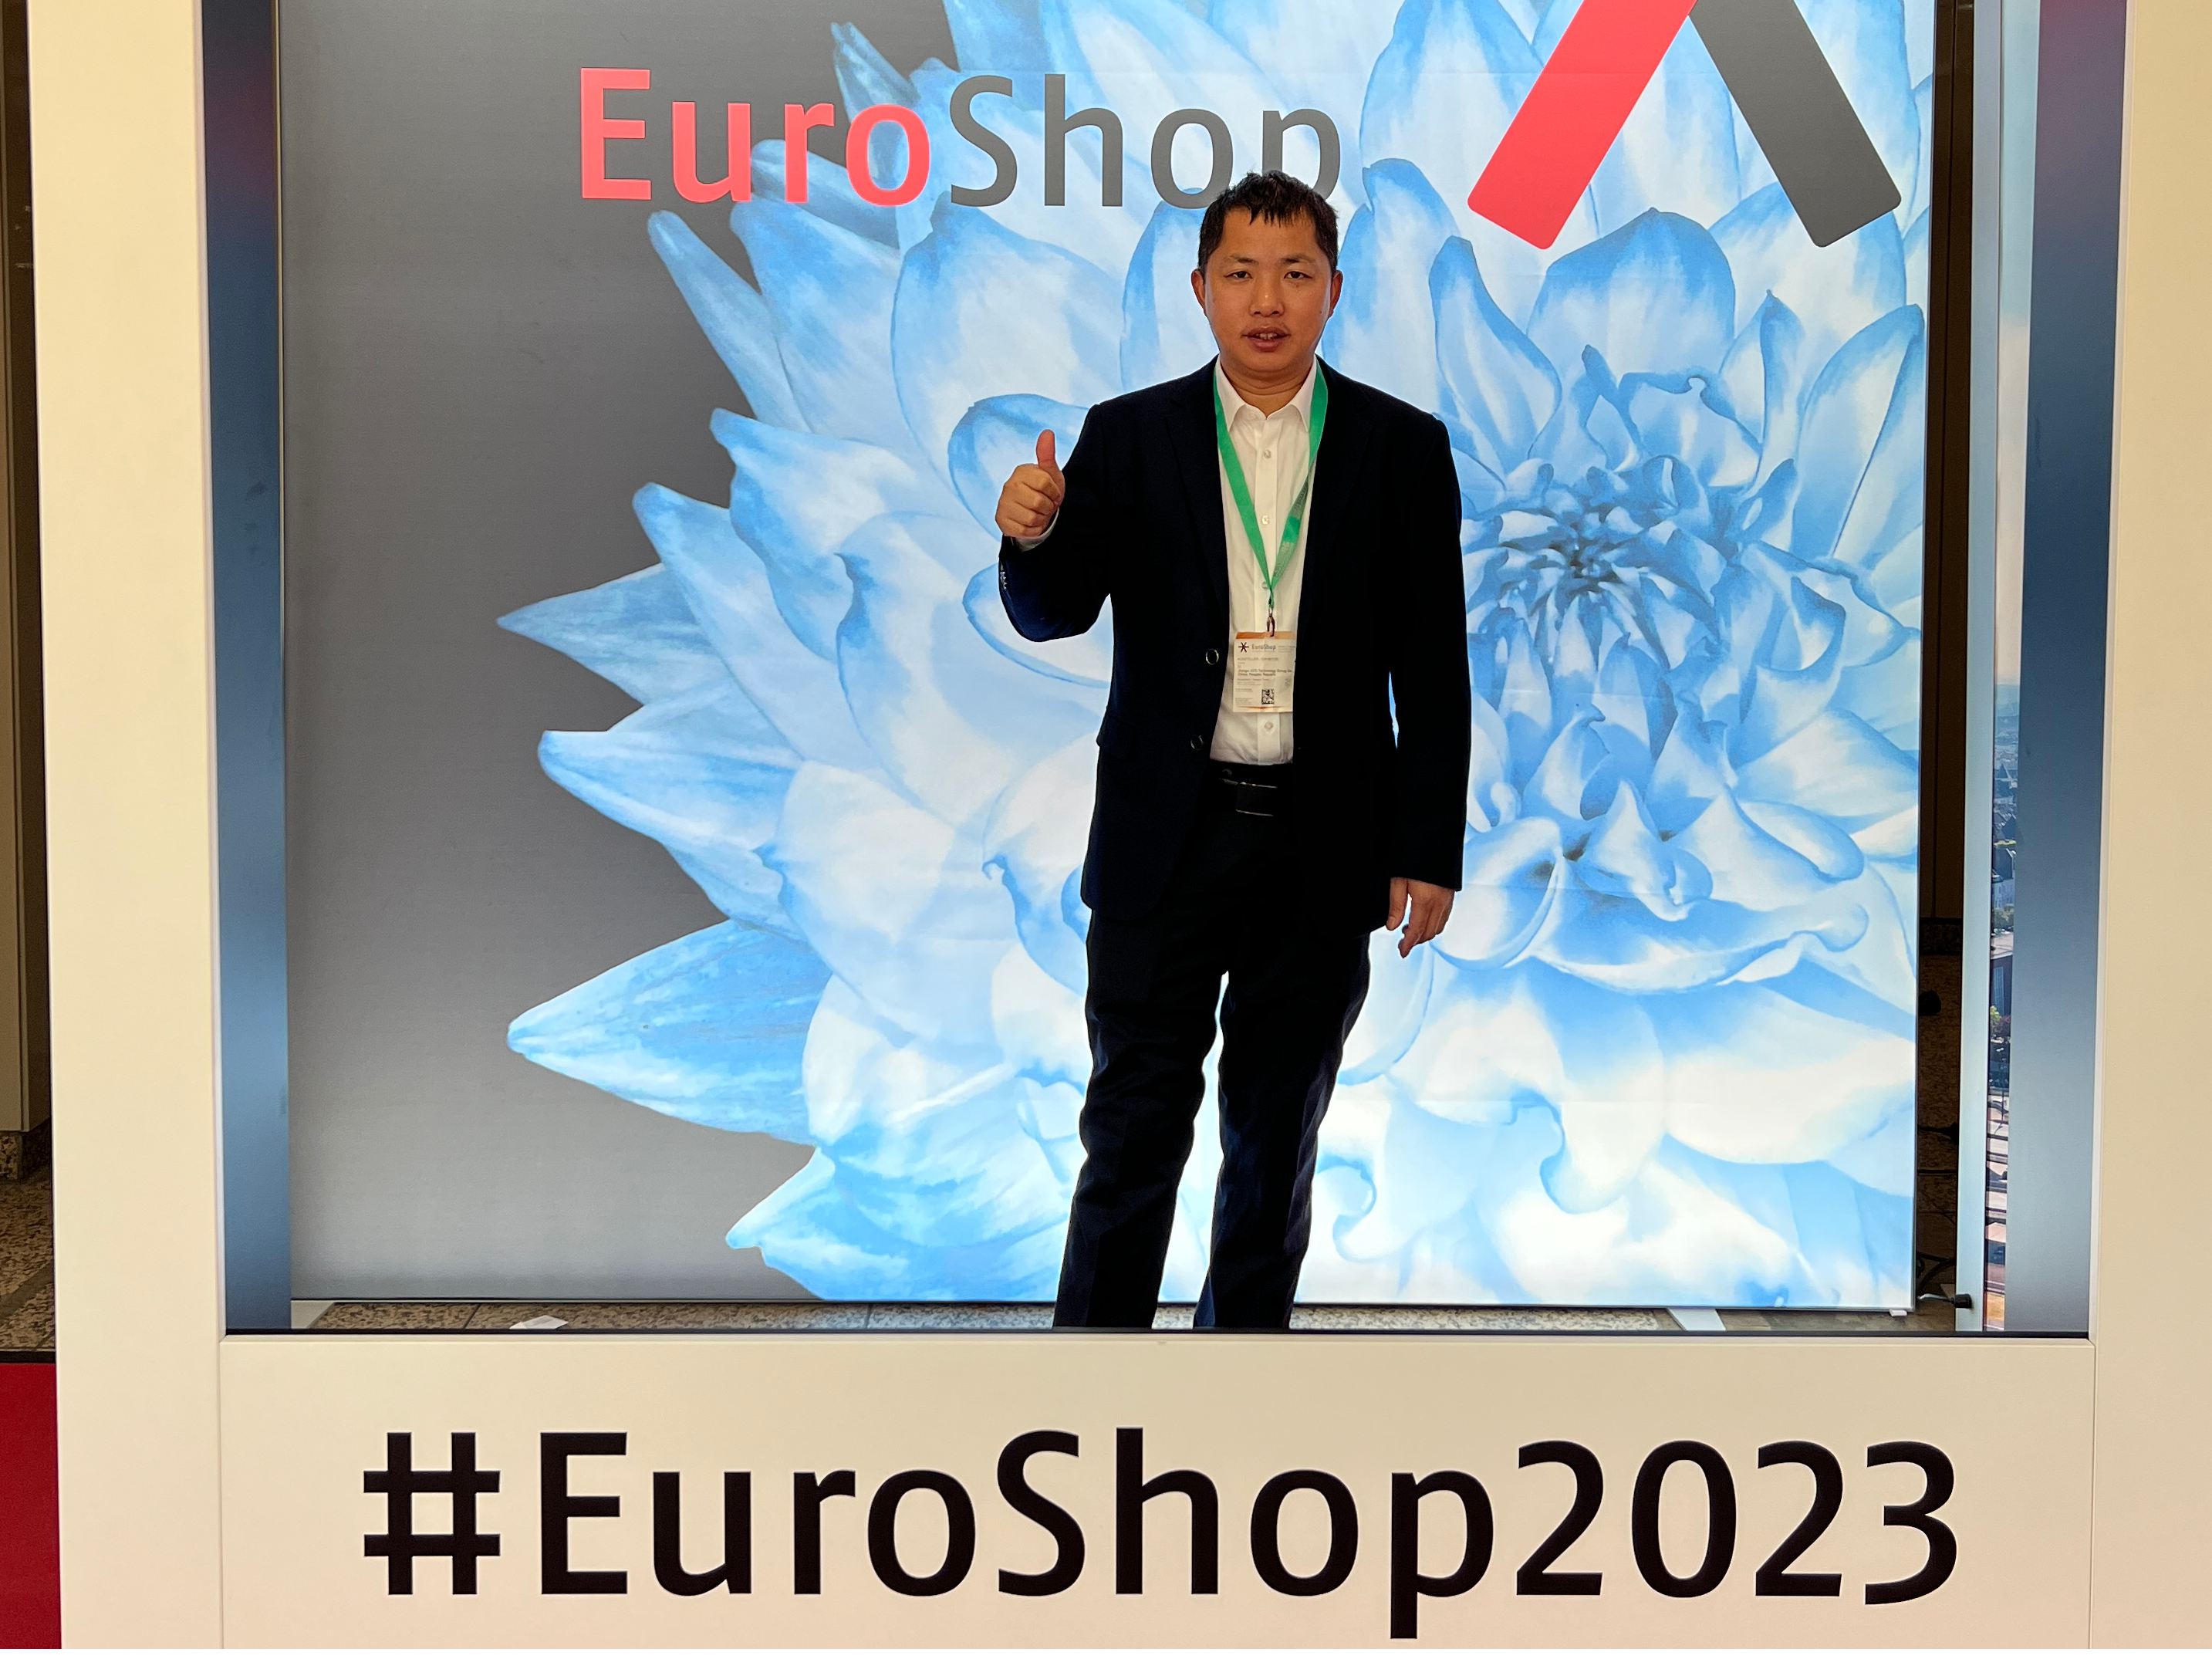 Ecobox EuroShop 2023: EVERYTHING THAT MOVES YOU!